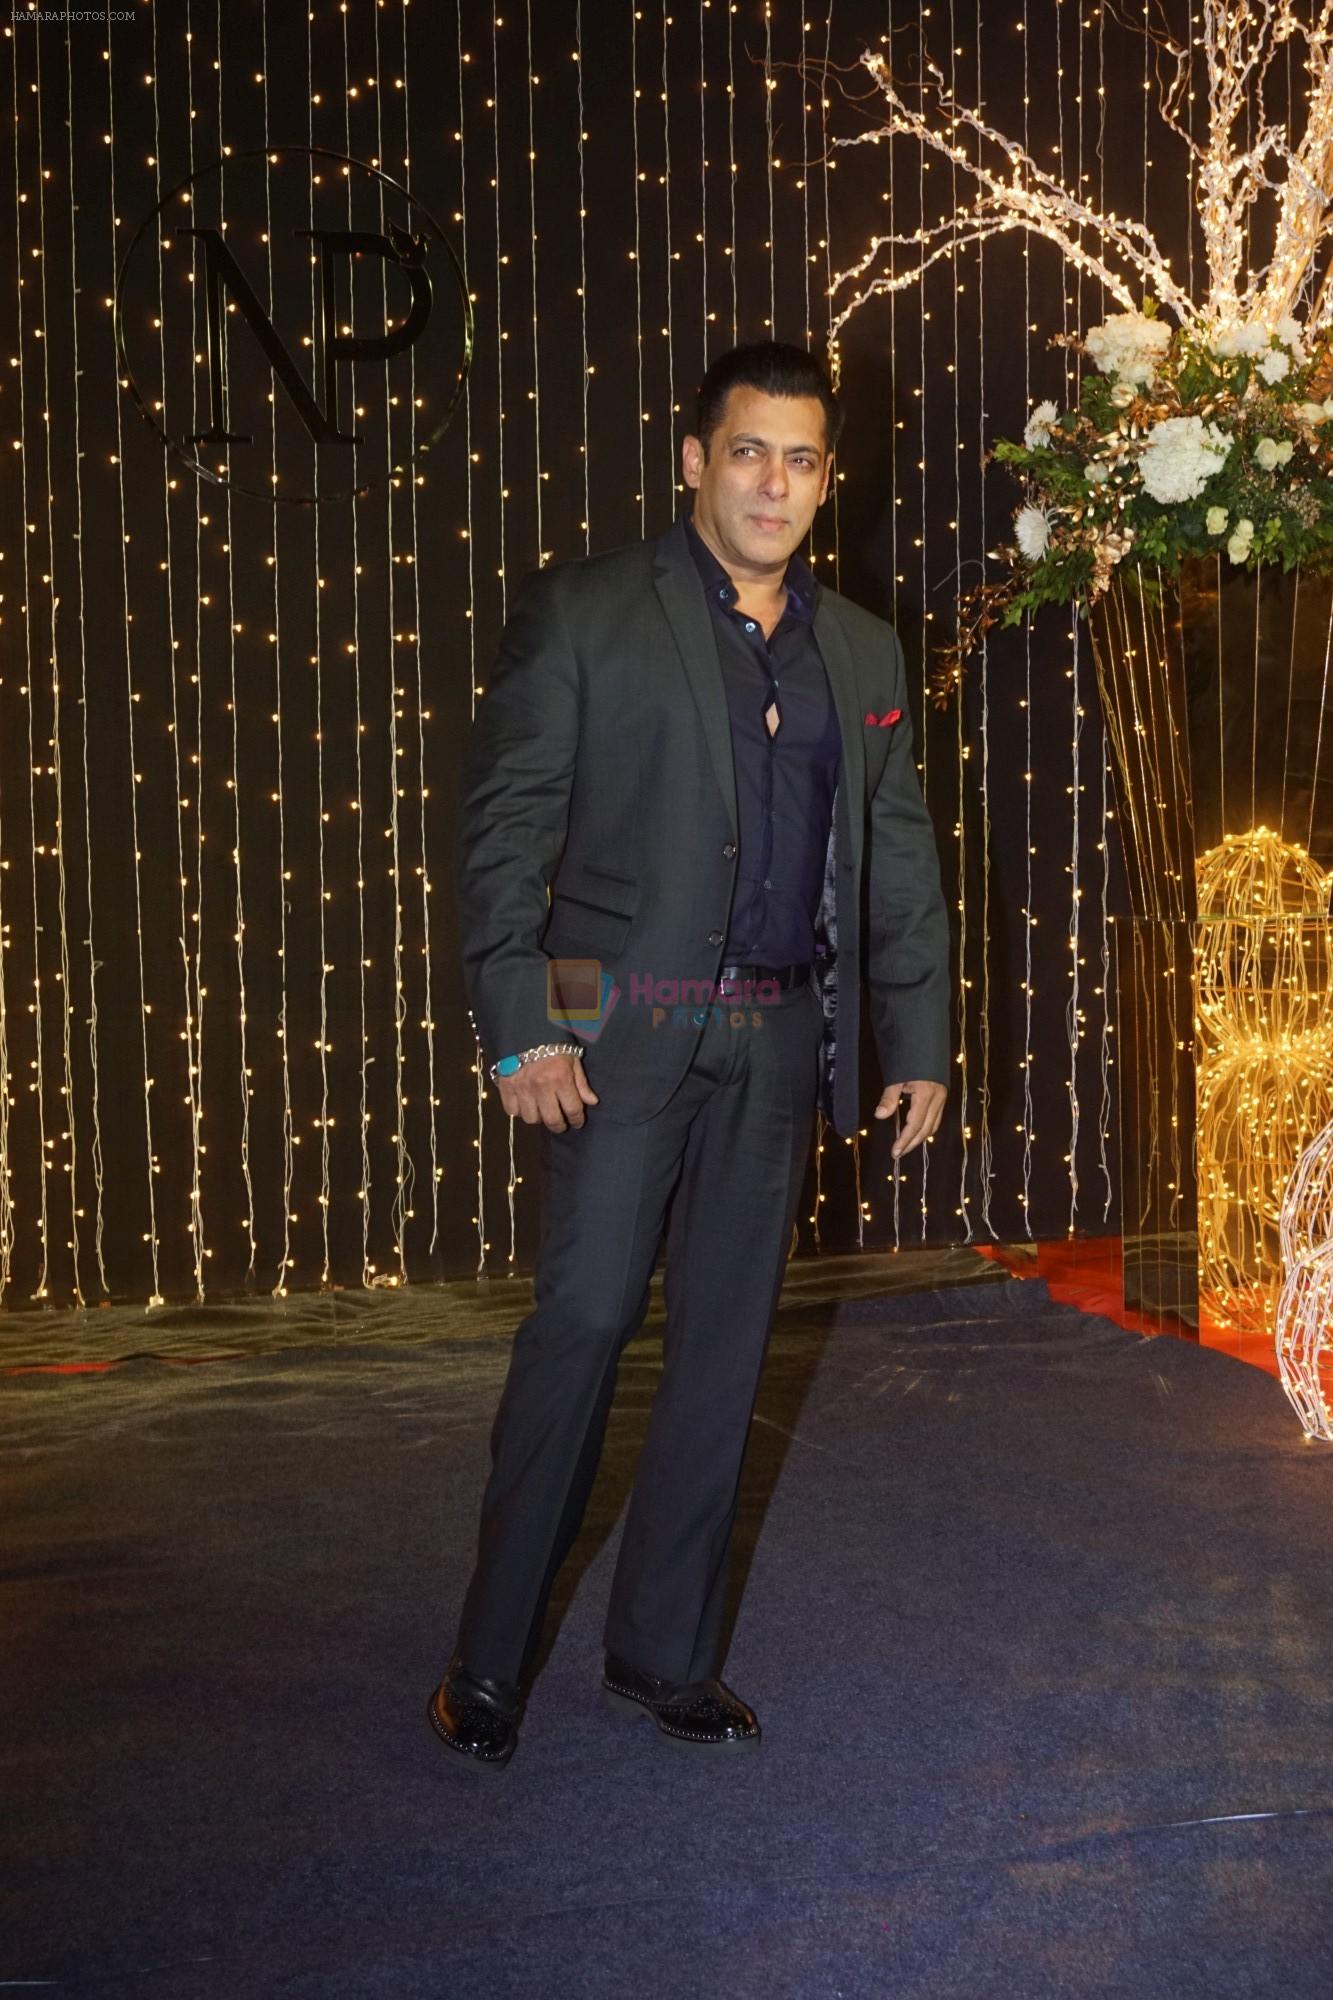 Salman Khan at Priyanka Chopra & Nick Jonas wedding reception in Taj Lands End bandra on 20th Dec 2018